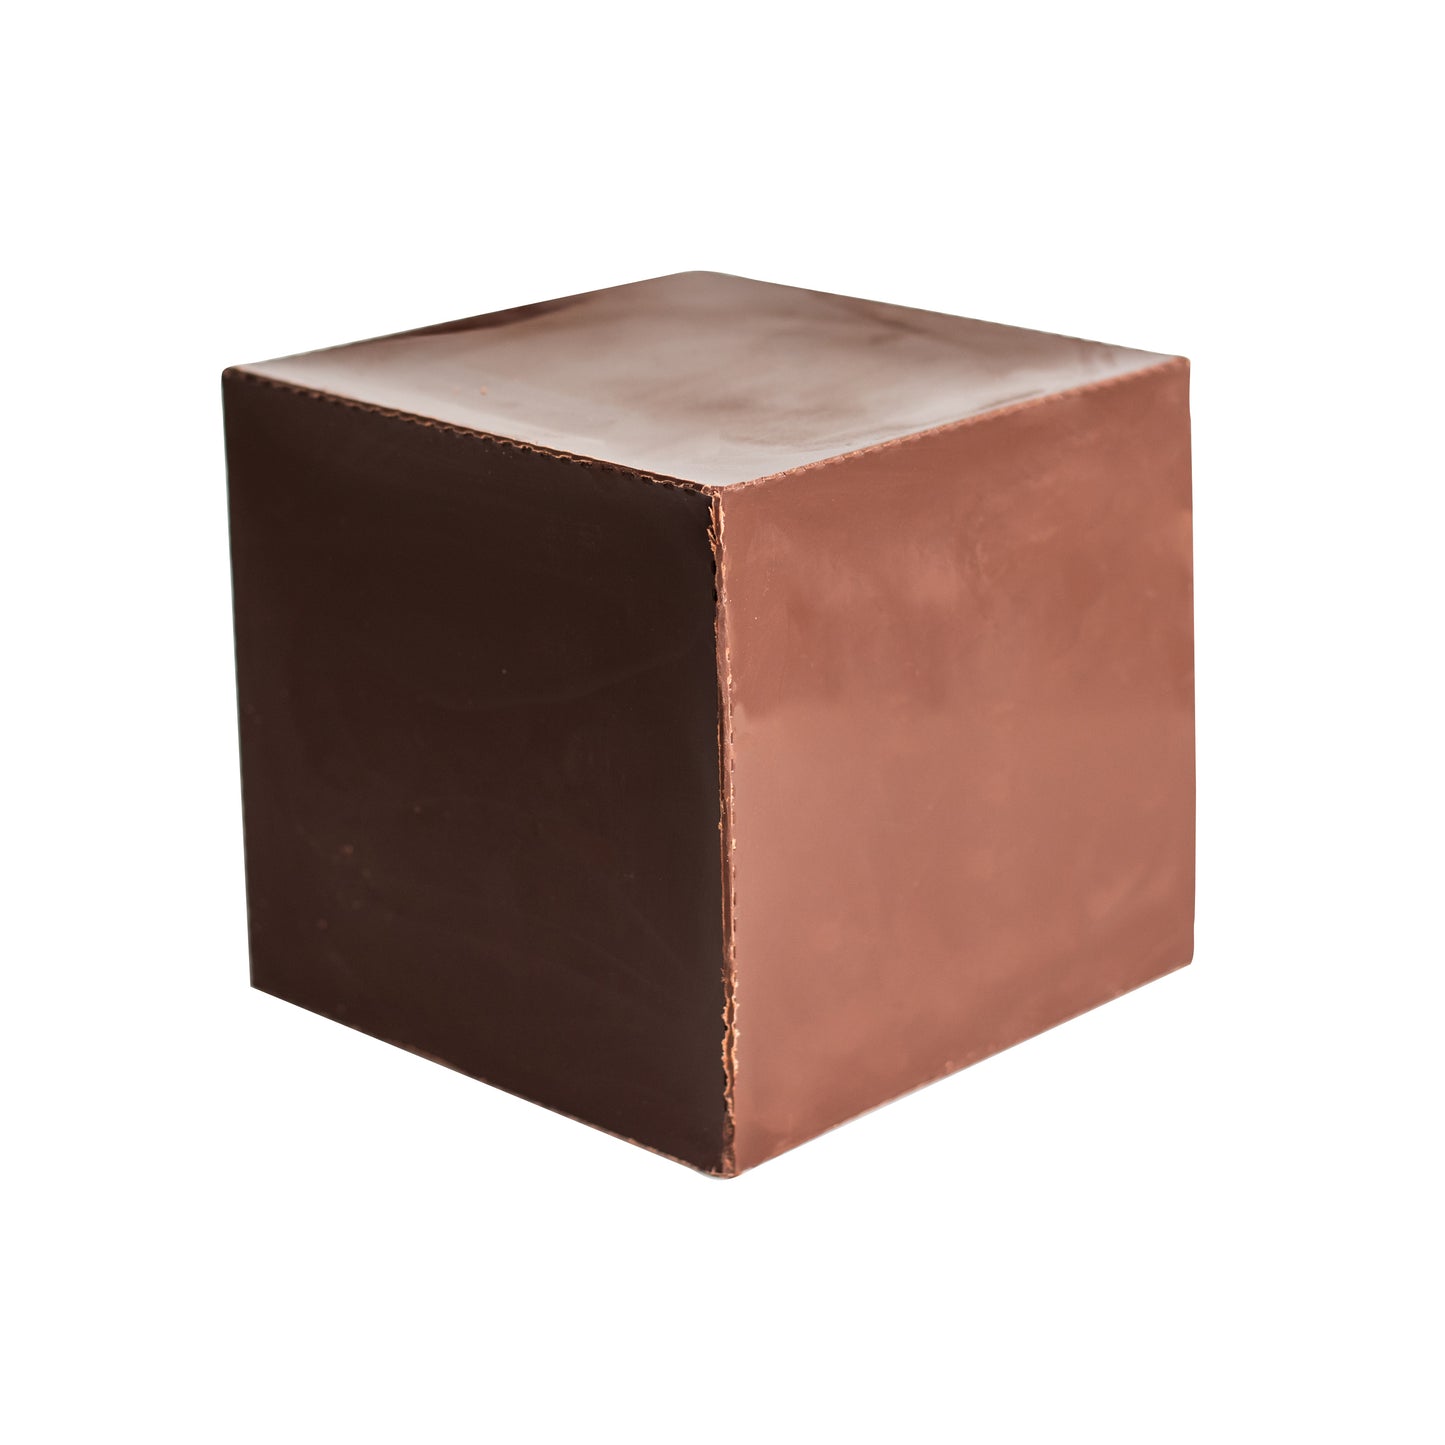 Kaboom Chocolaka Pinata Mold-Cube